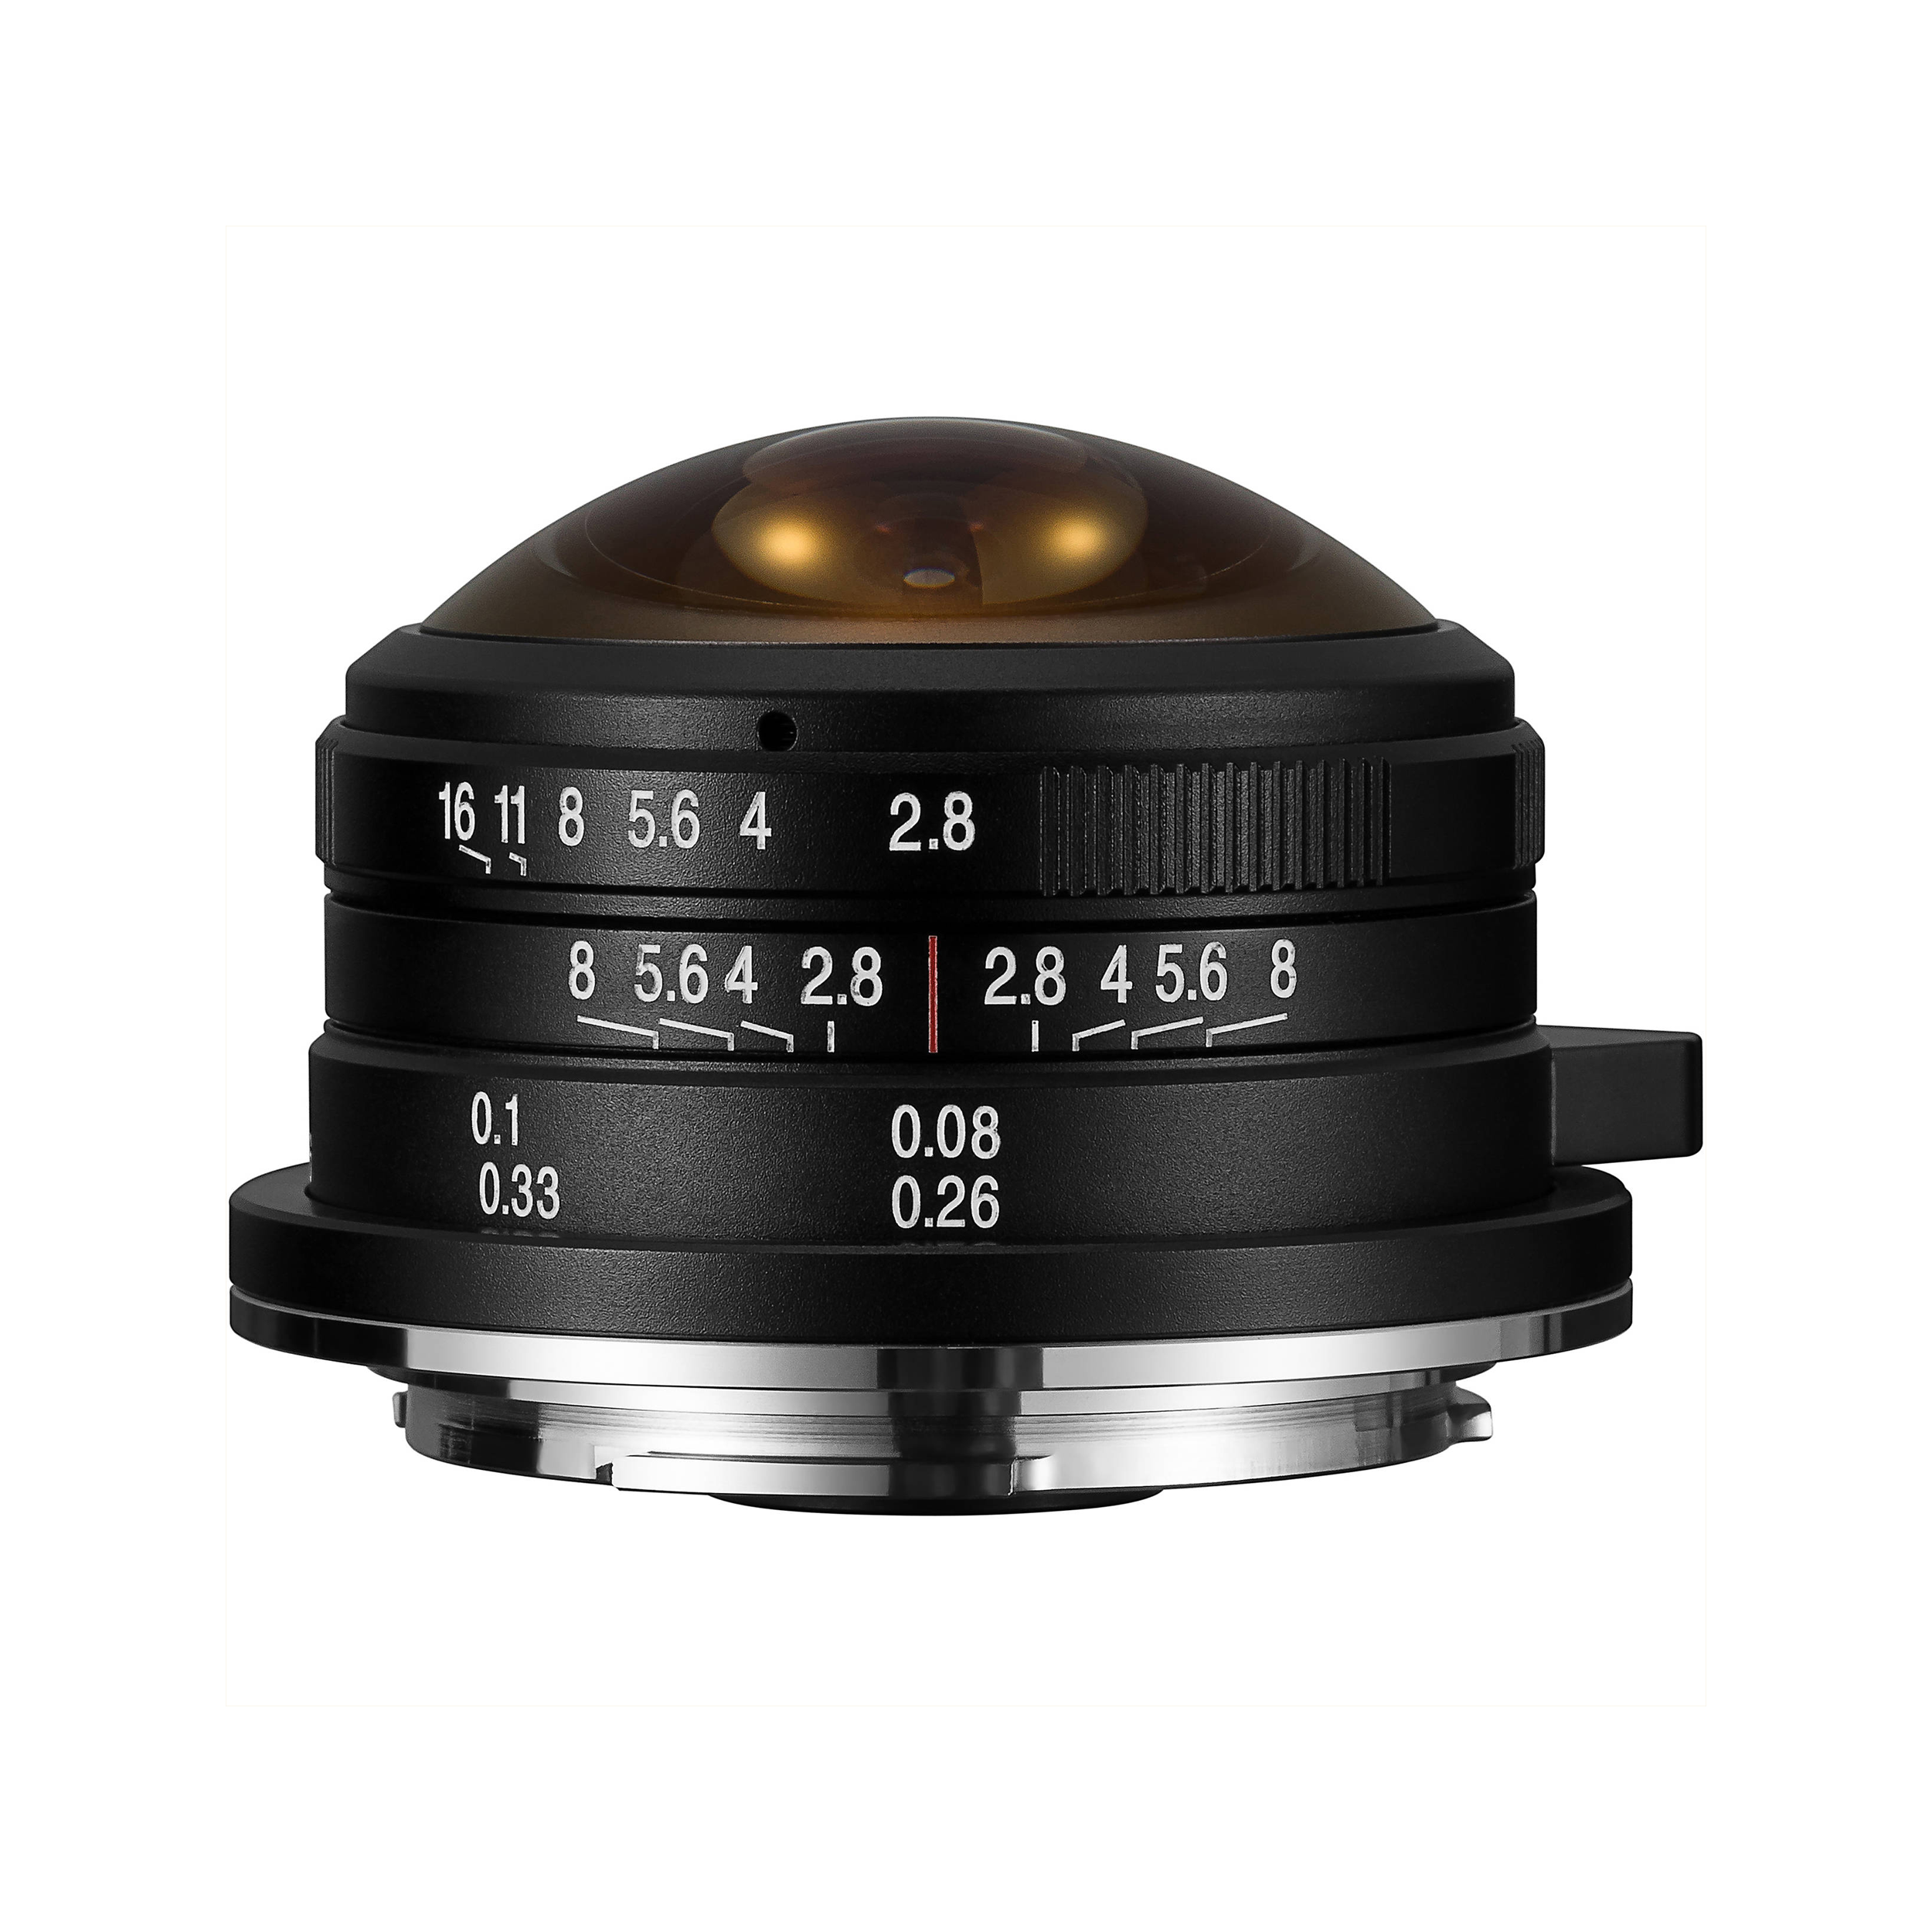 Laowa 4mm f/2.8 Fisheye Lens for Micro Four Thirds